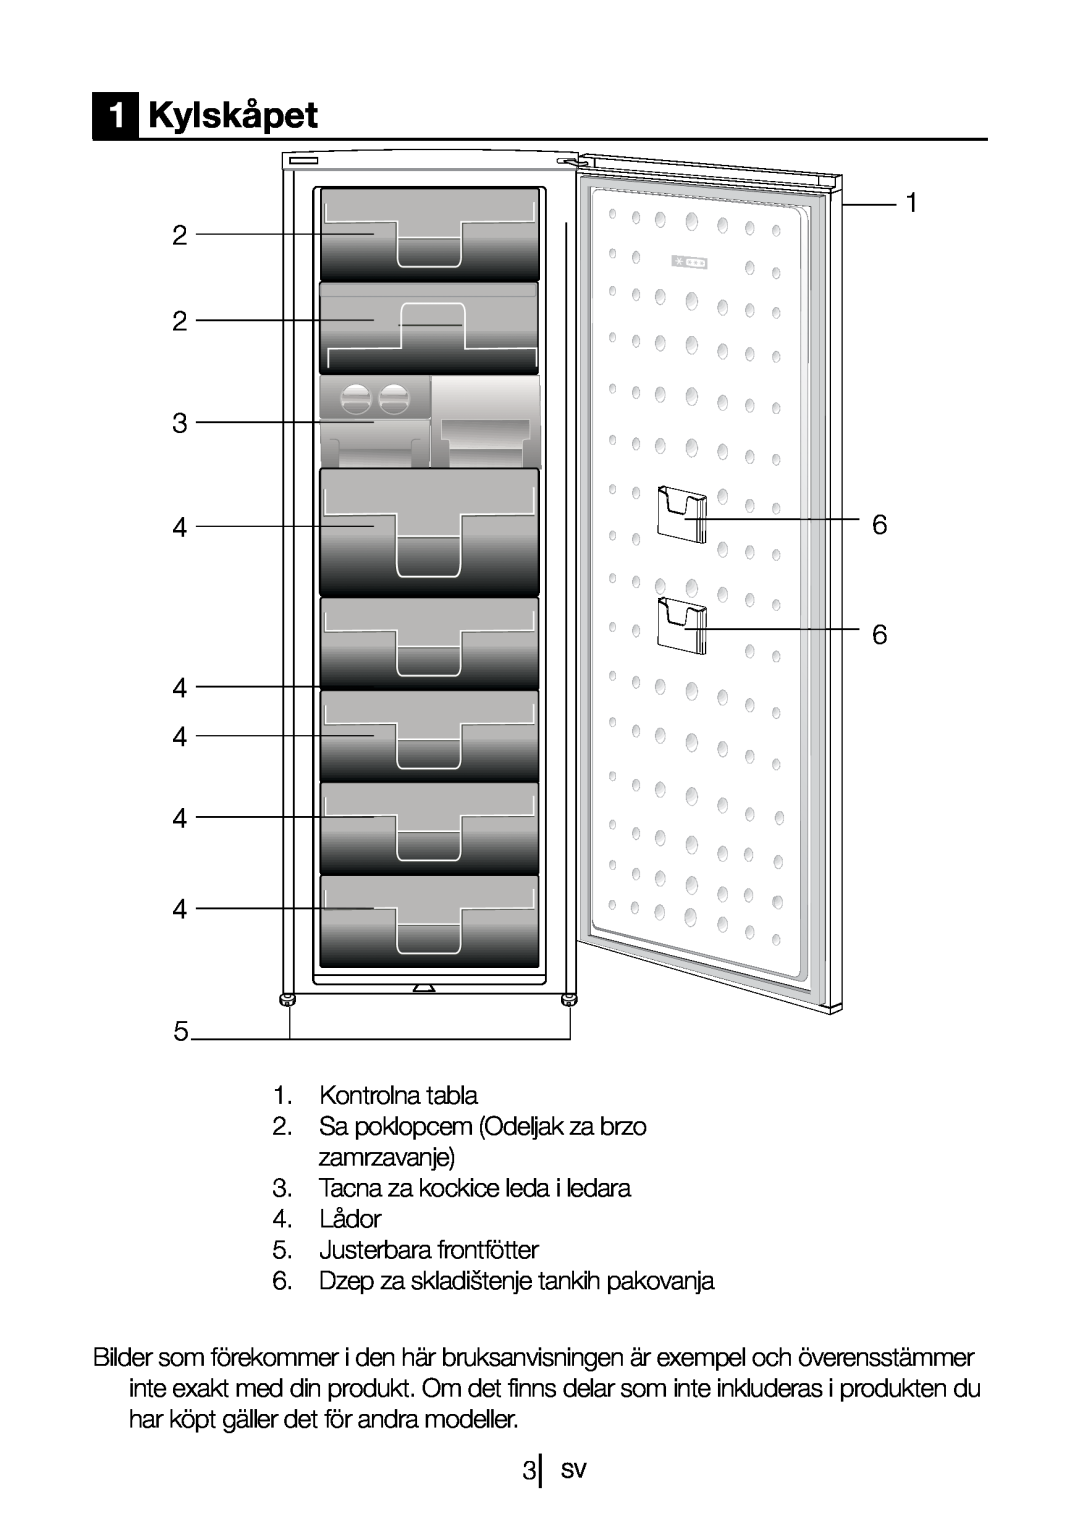 Blomberg 9682 XA+ manual 1Kylskåpet, 2 2 3 4 4 4 4 4 5, 1 6, Kontrolna tabla, Sa poklopcem Odeljak za brzo zamrzavanje 